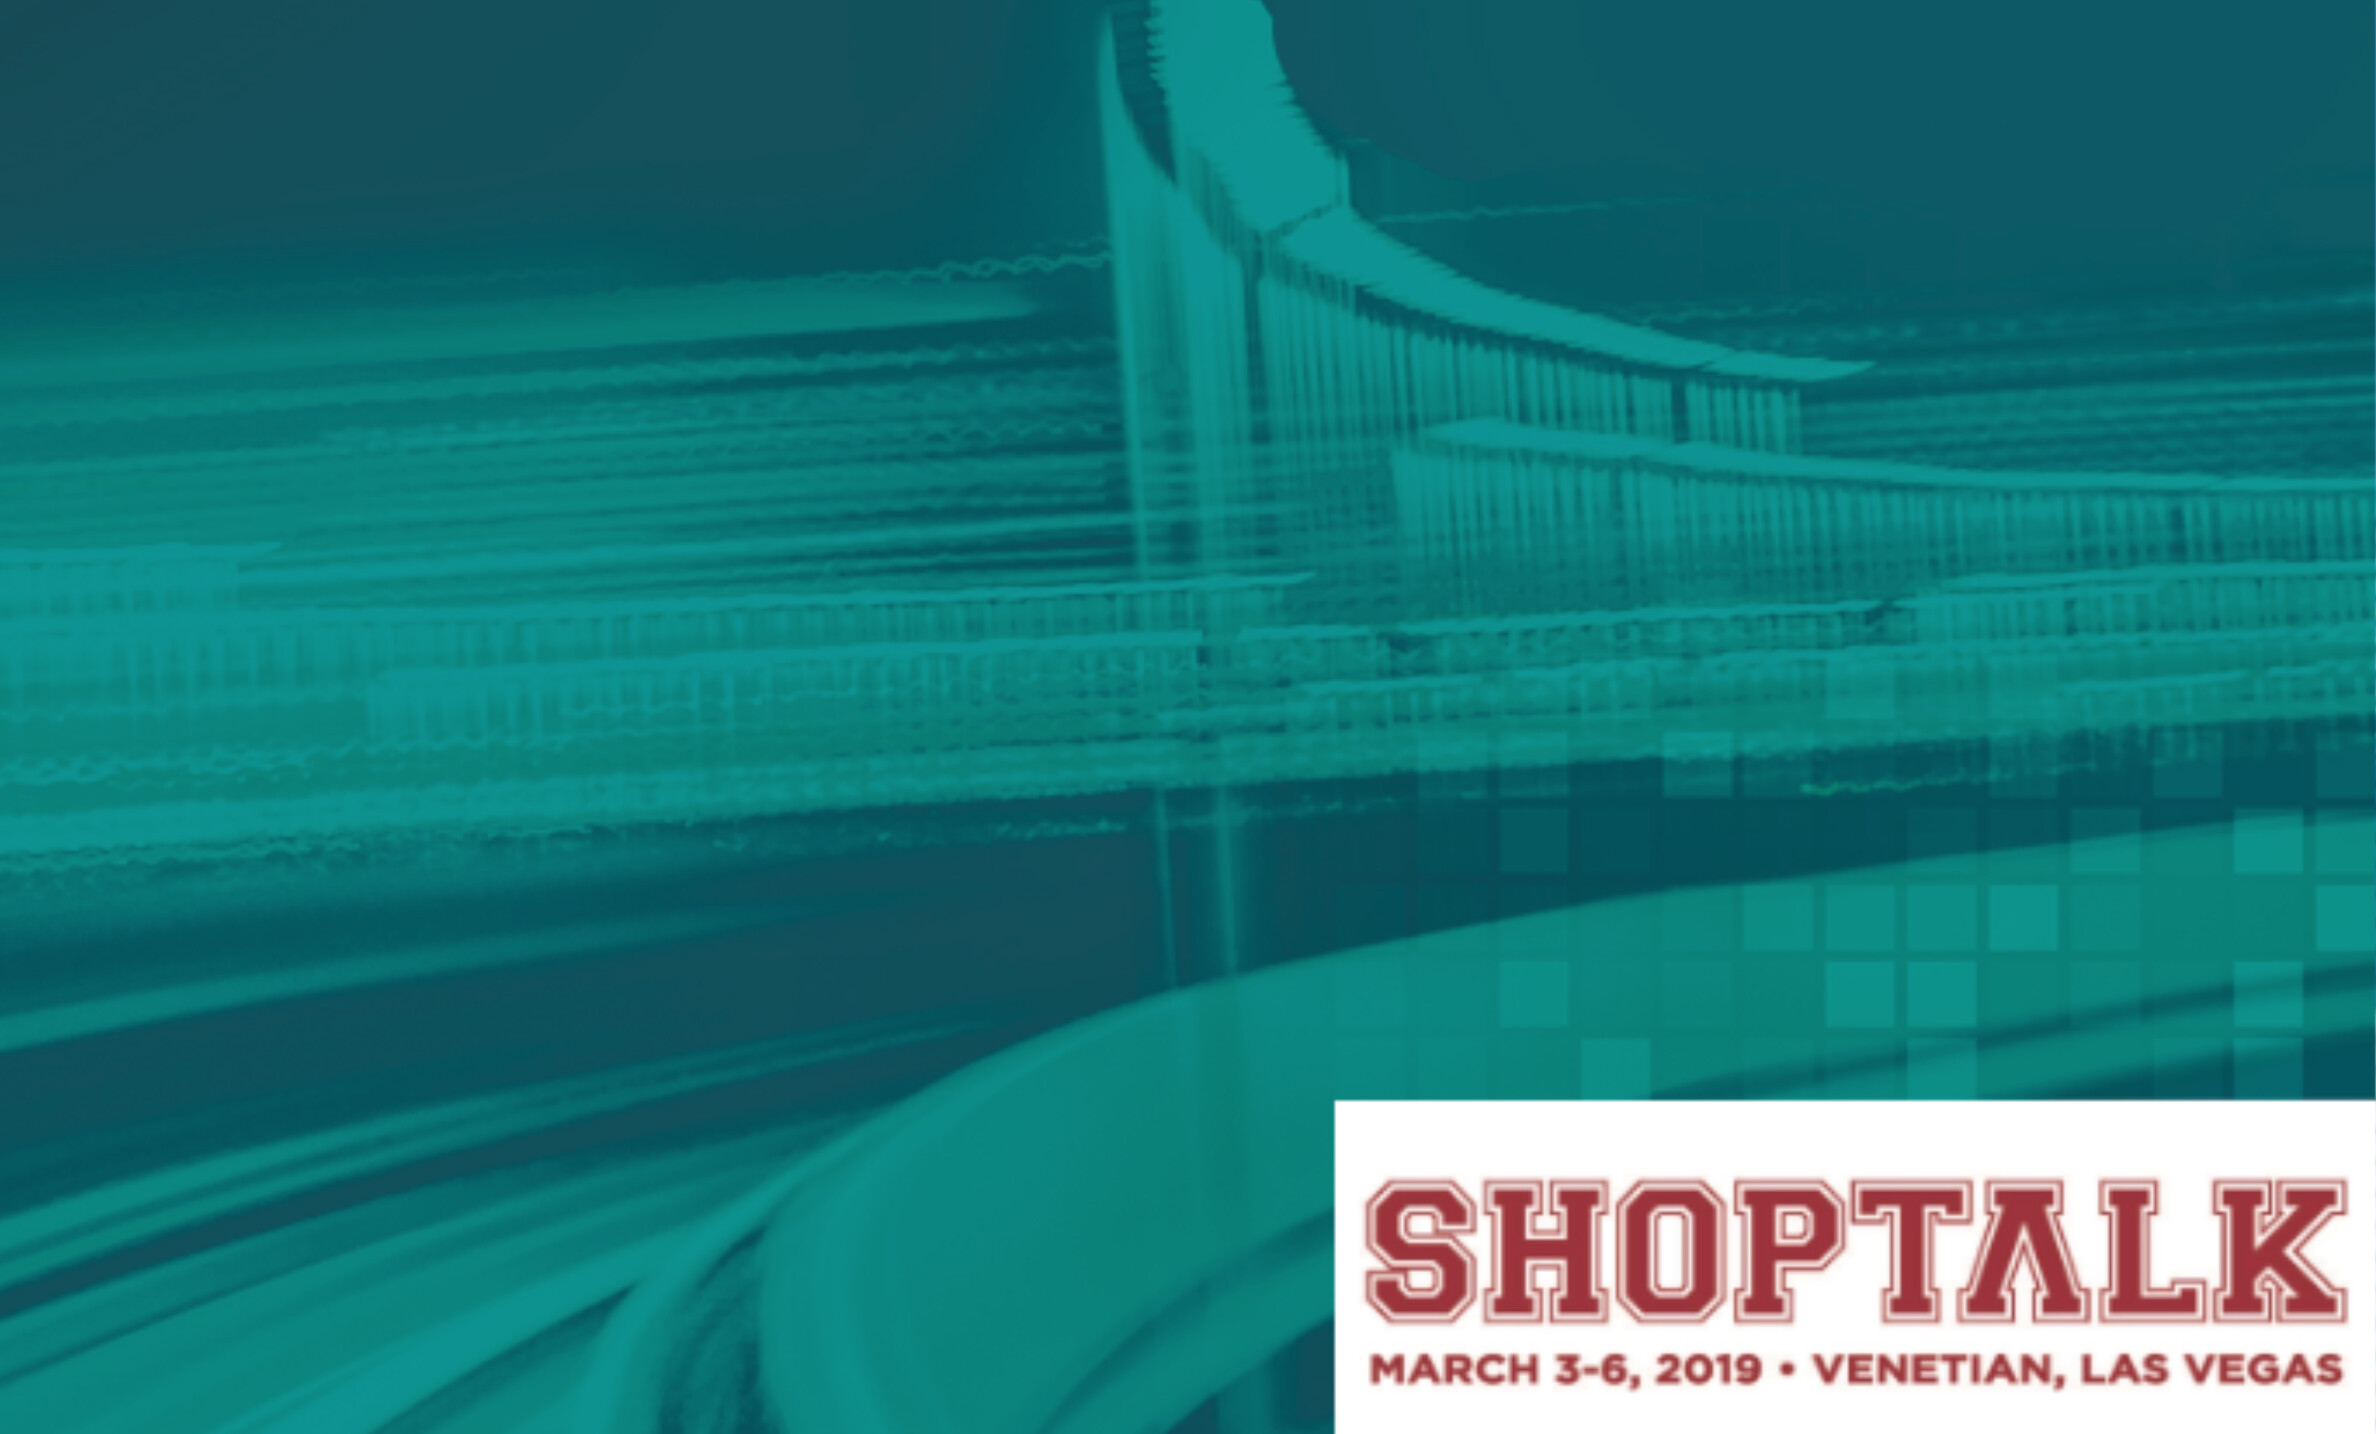 commercetools showcases technology innovations at Shoptalk 2019